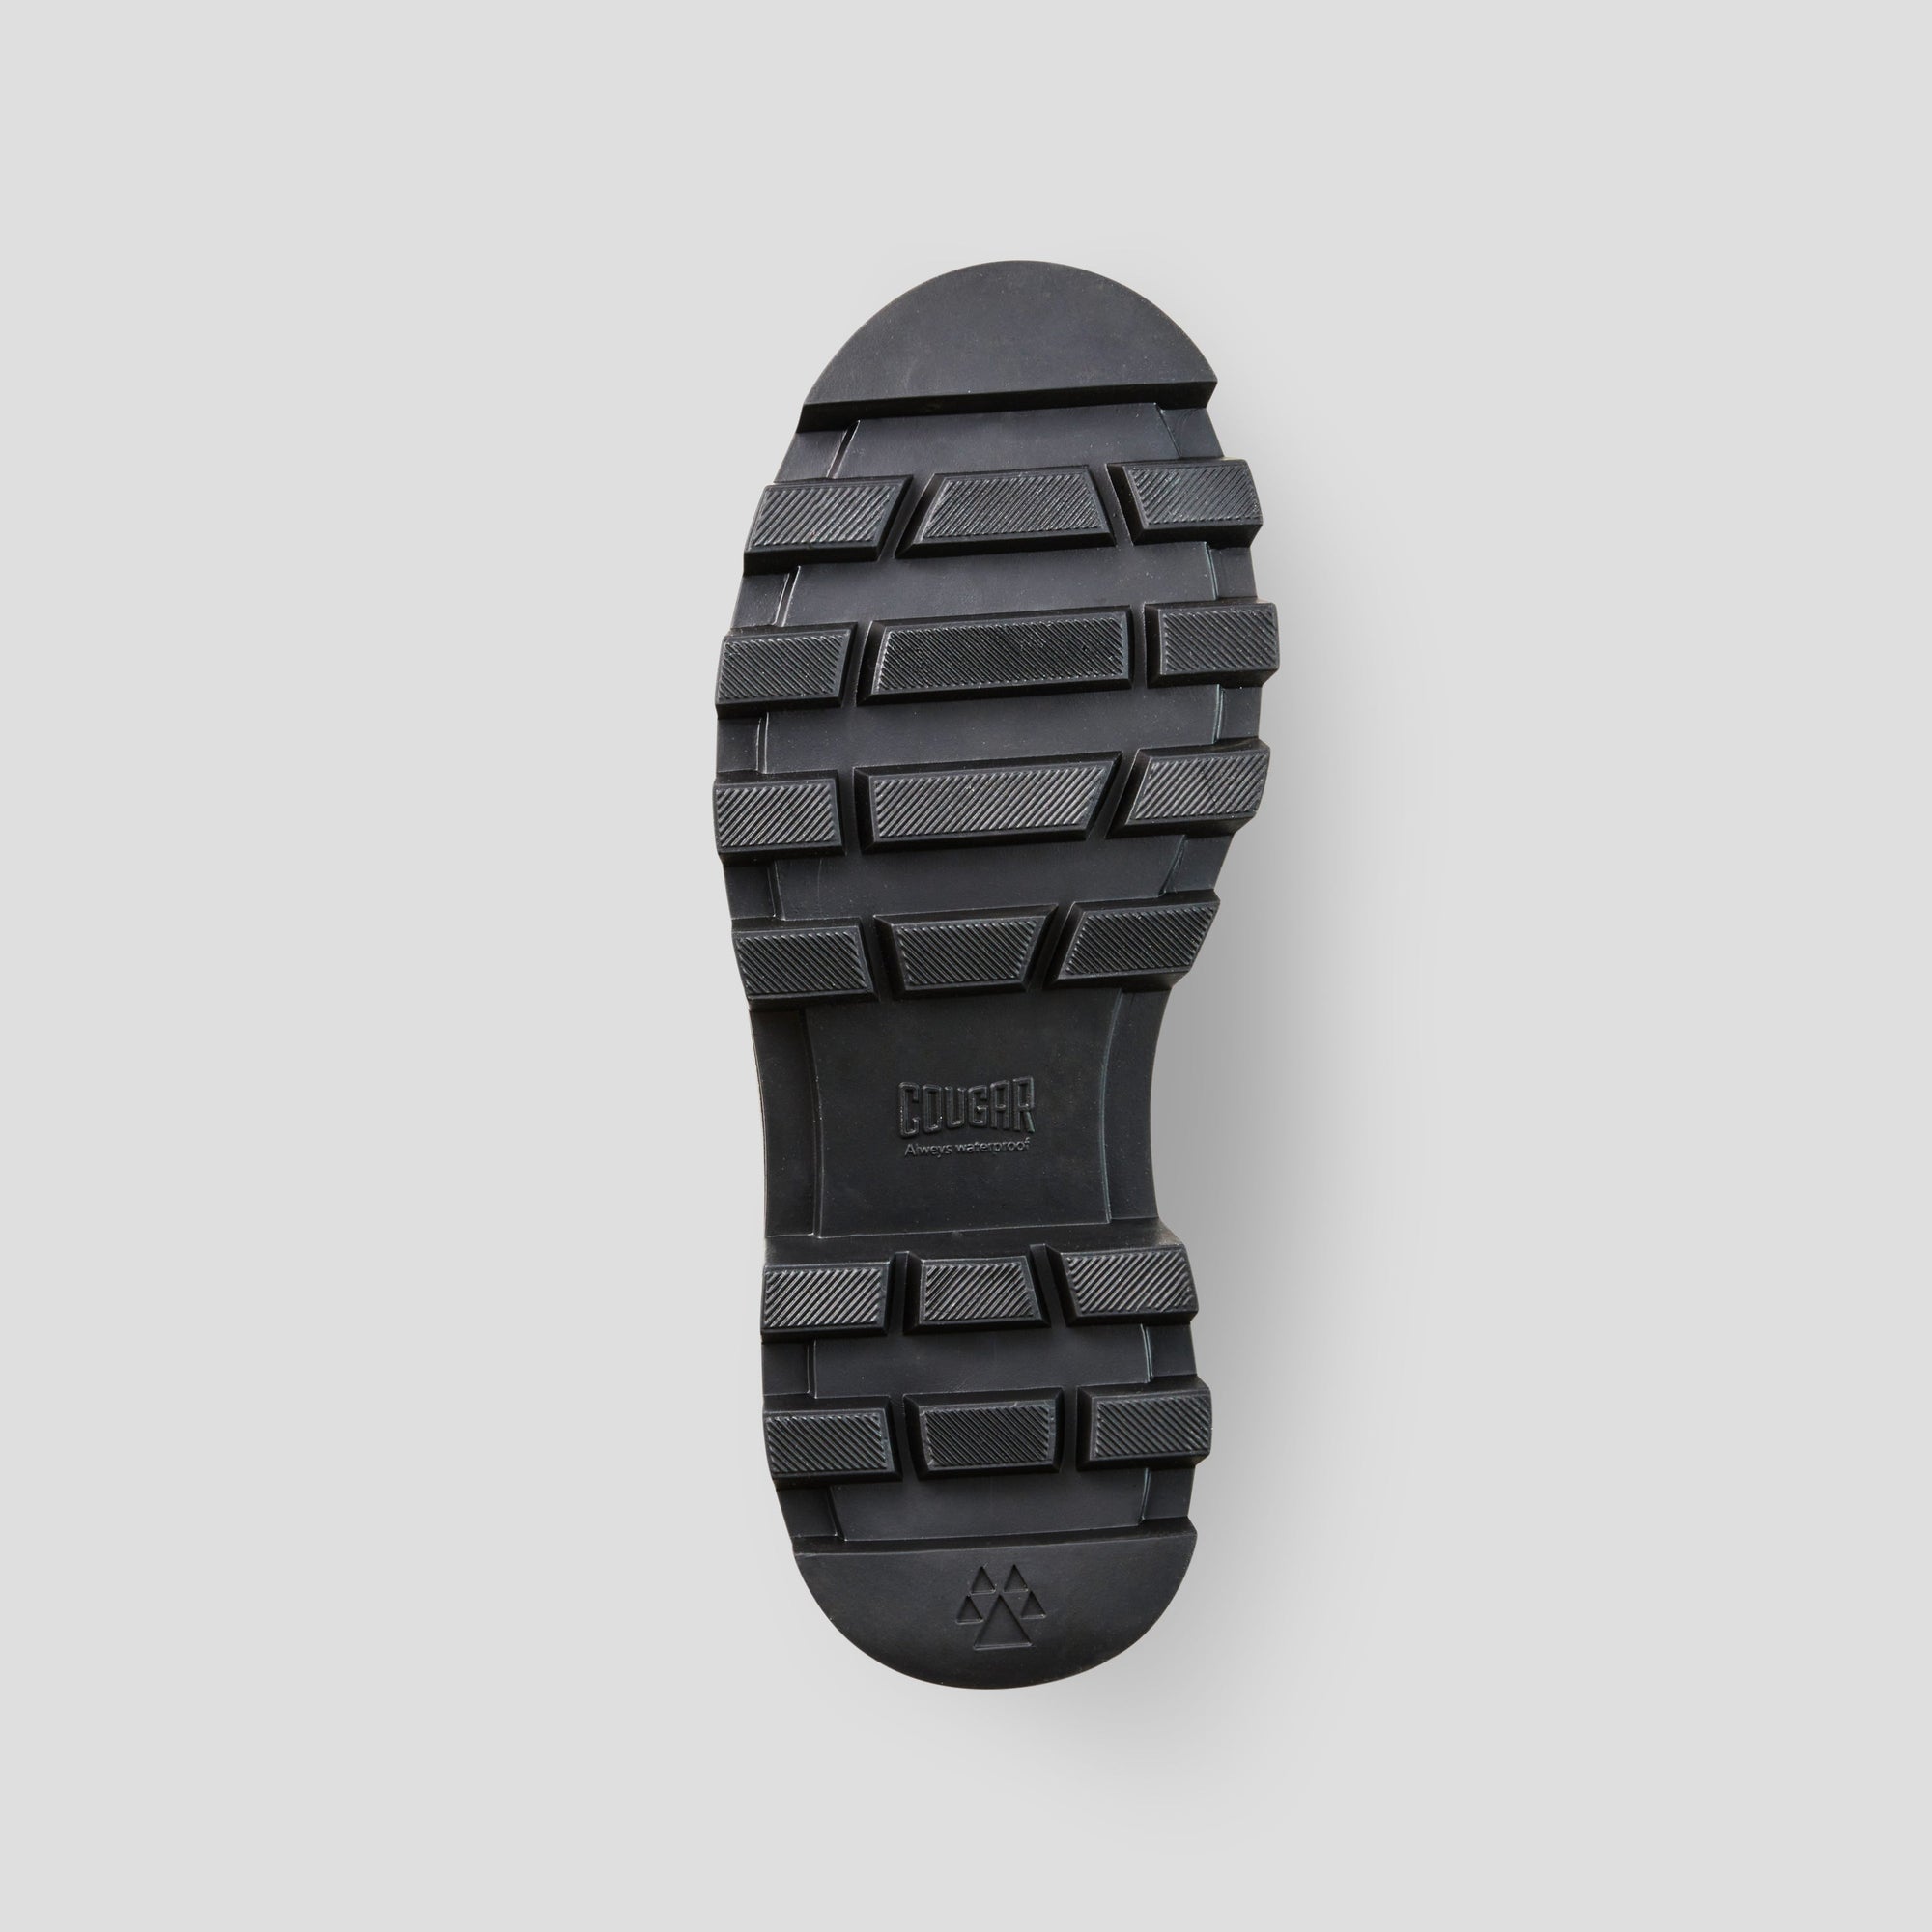 Shani Leather Waterproof Boot with PrimaLoft® - Colour Chianti